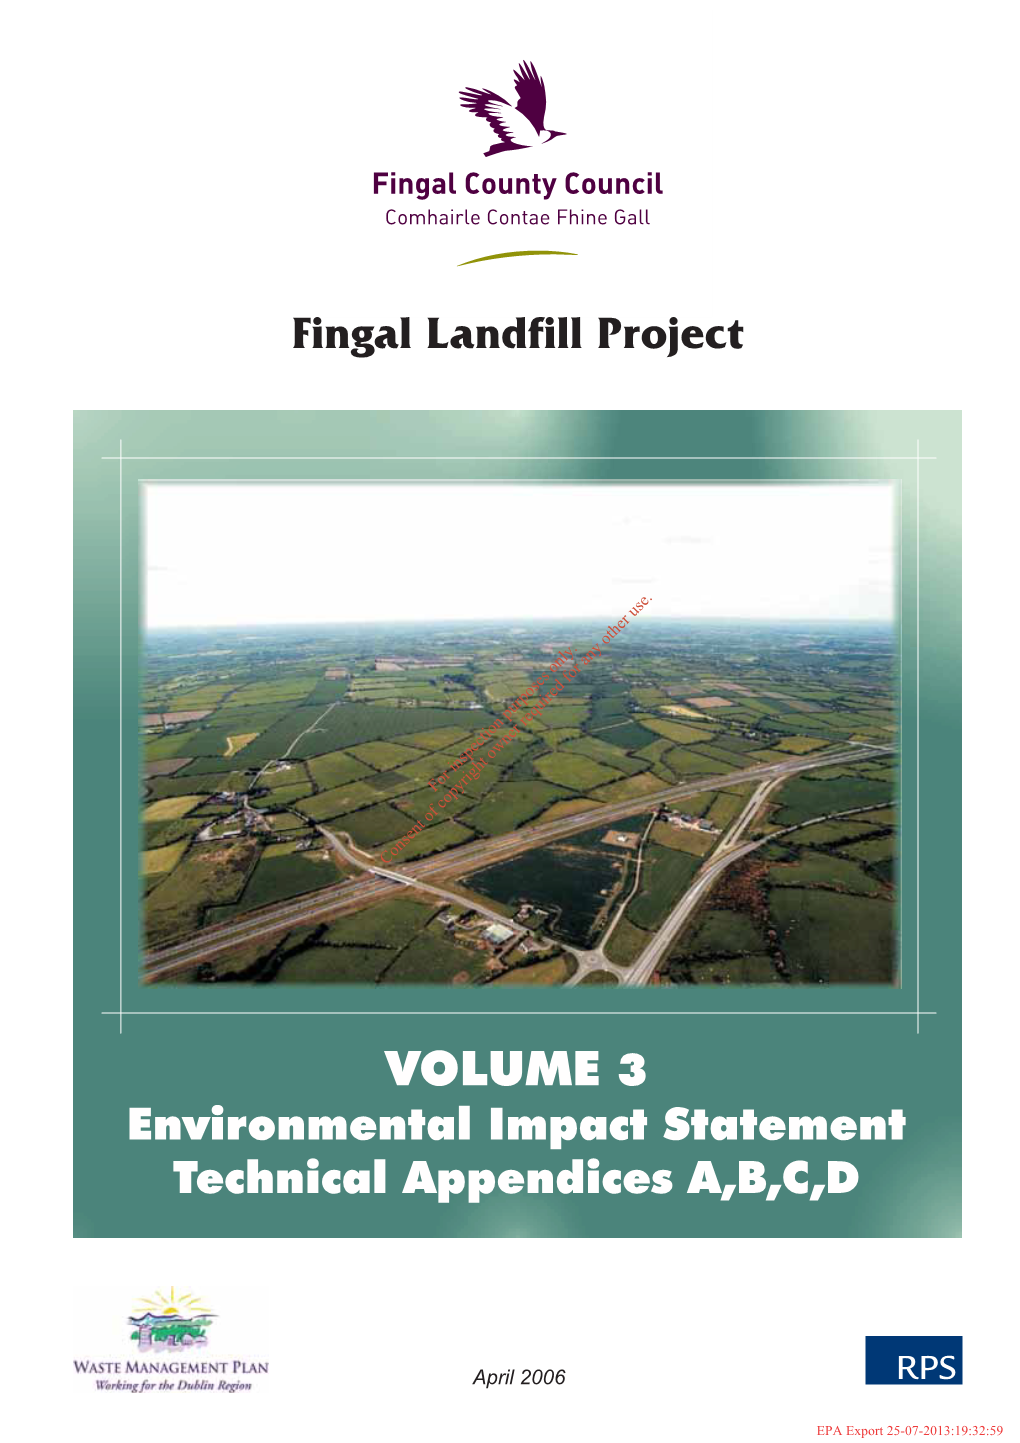 VOLUME 3 Environmental Impact Statement Technical Appendices A,B,C,D